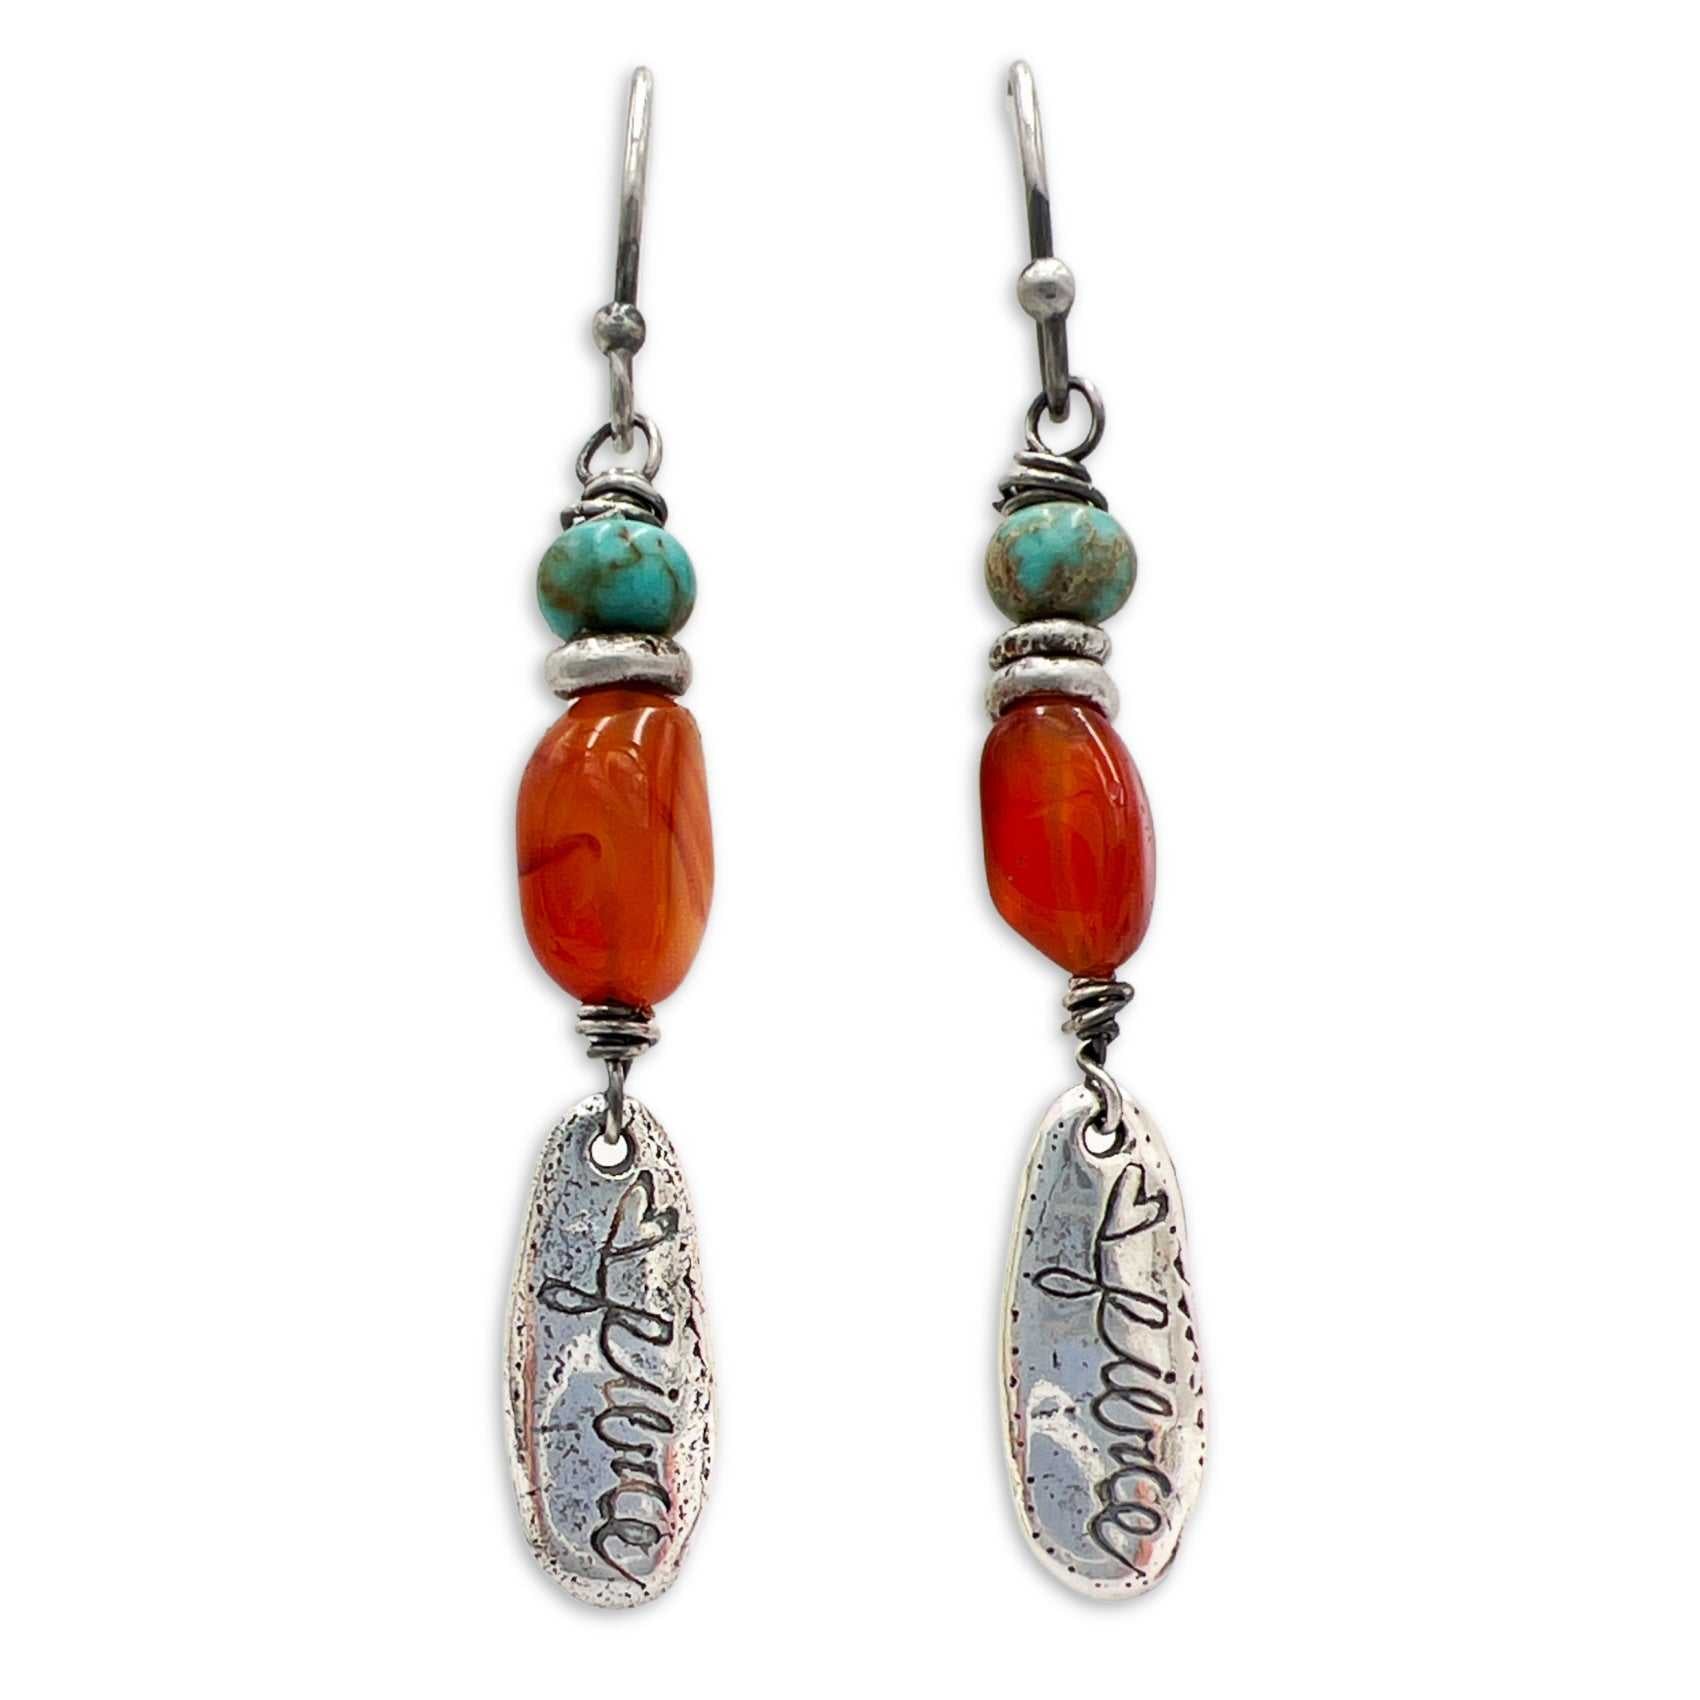 Fierce charm with Coral bead handmade earrings